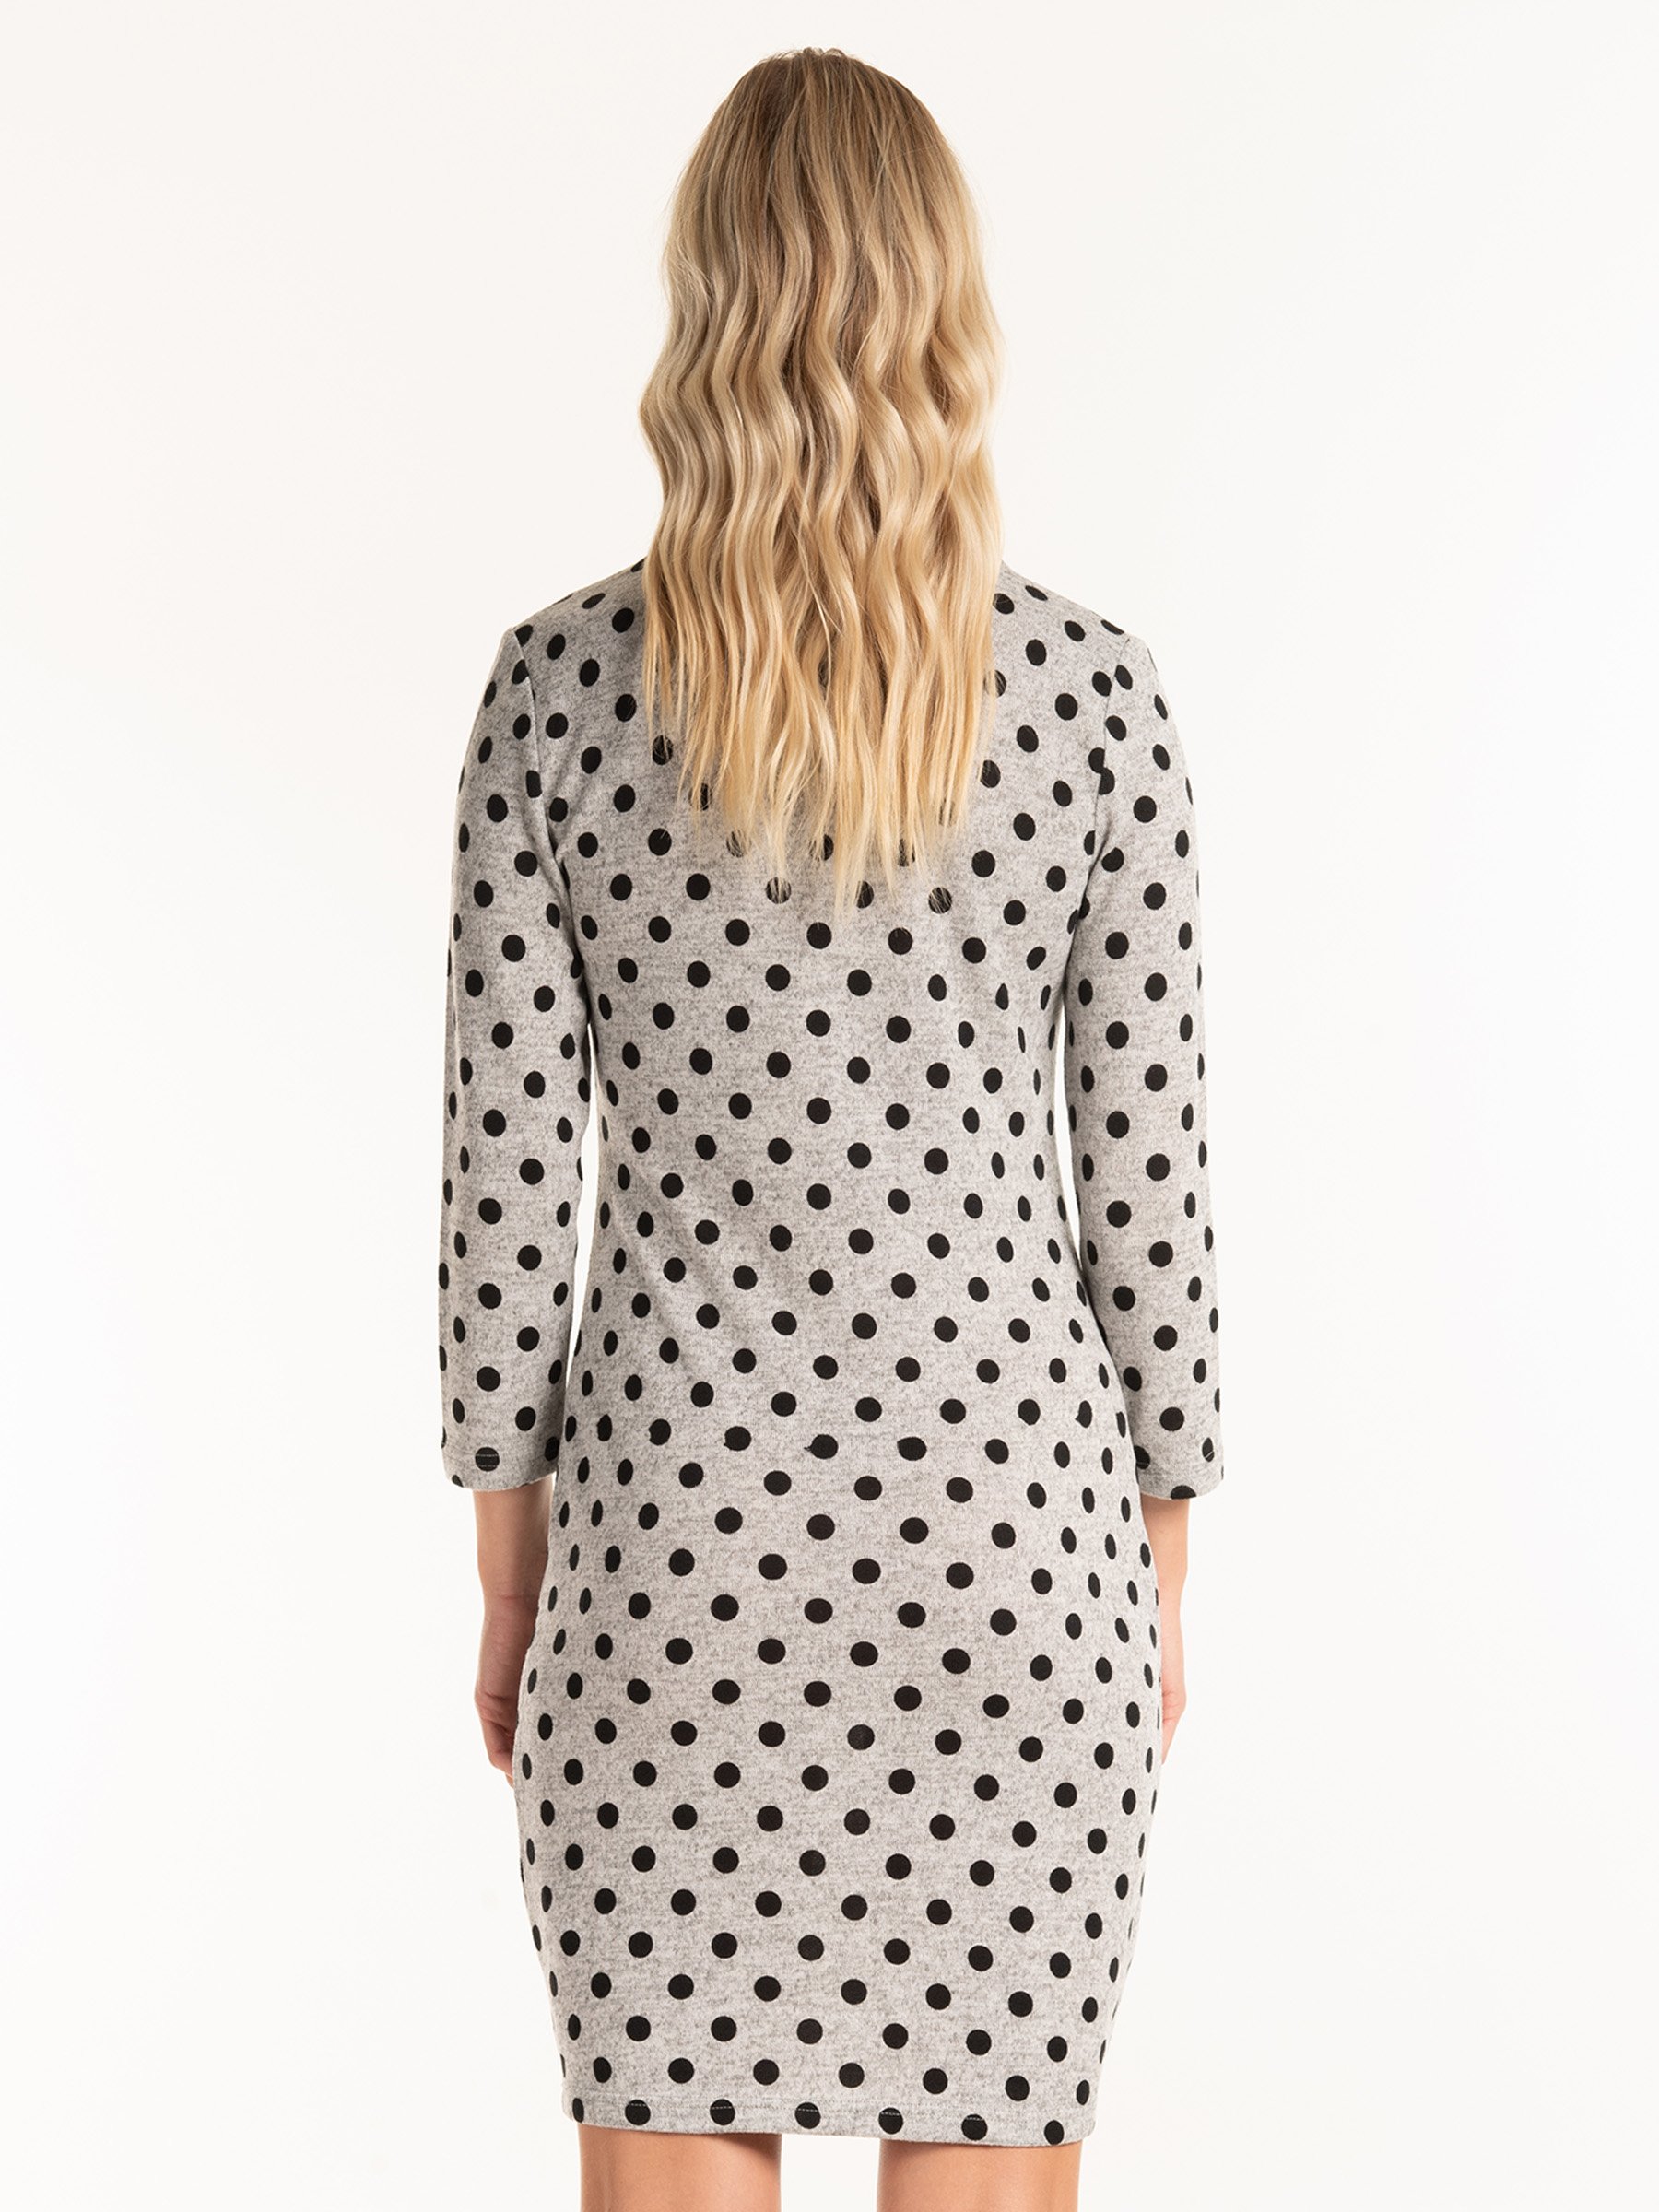 Polka dot print dress with zipper | GATE